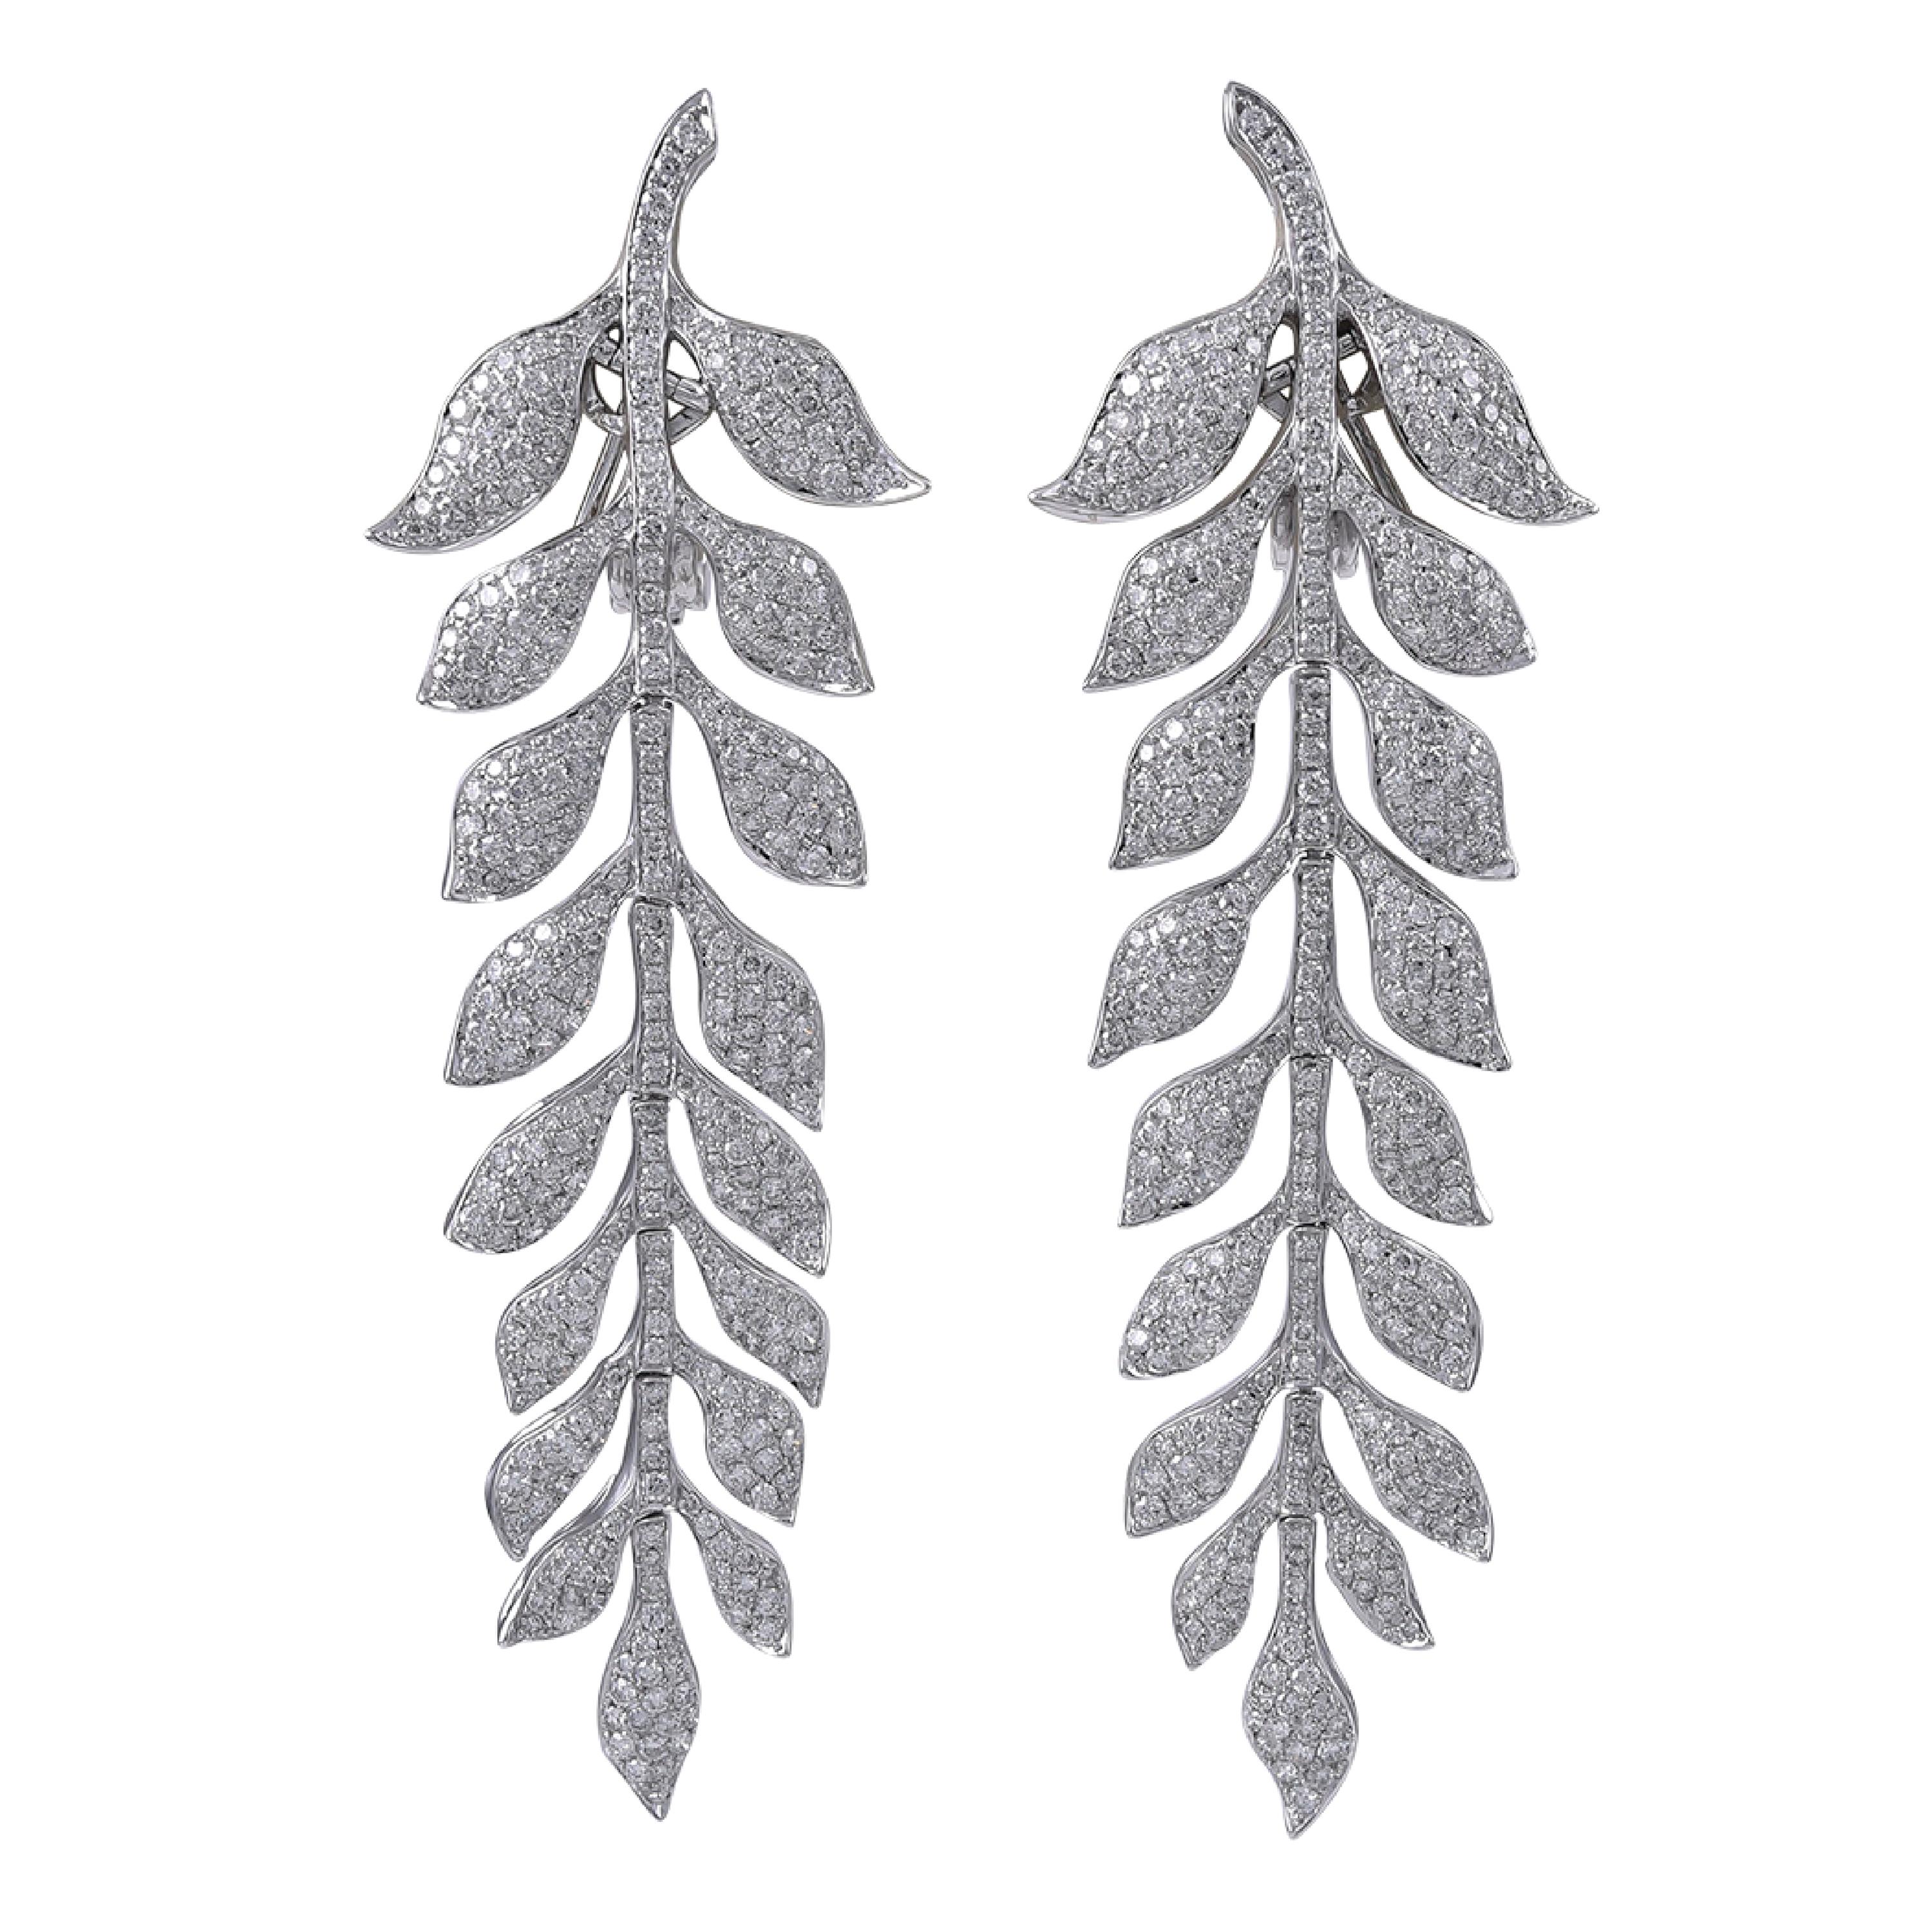 Sophia D. 5.28 Carats Diamond Dangling Earrings in Platinum Setting